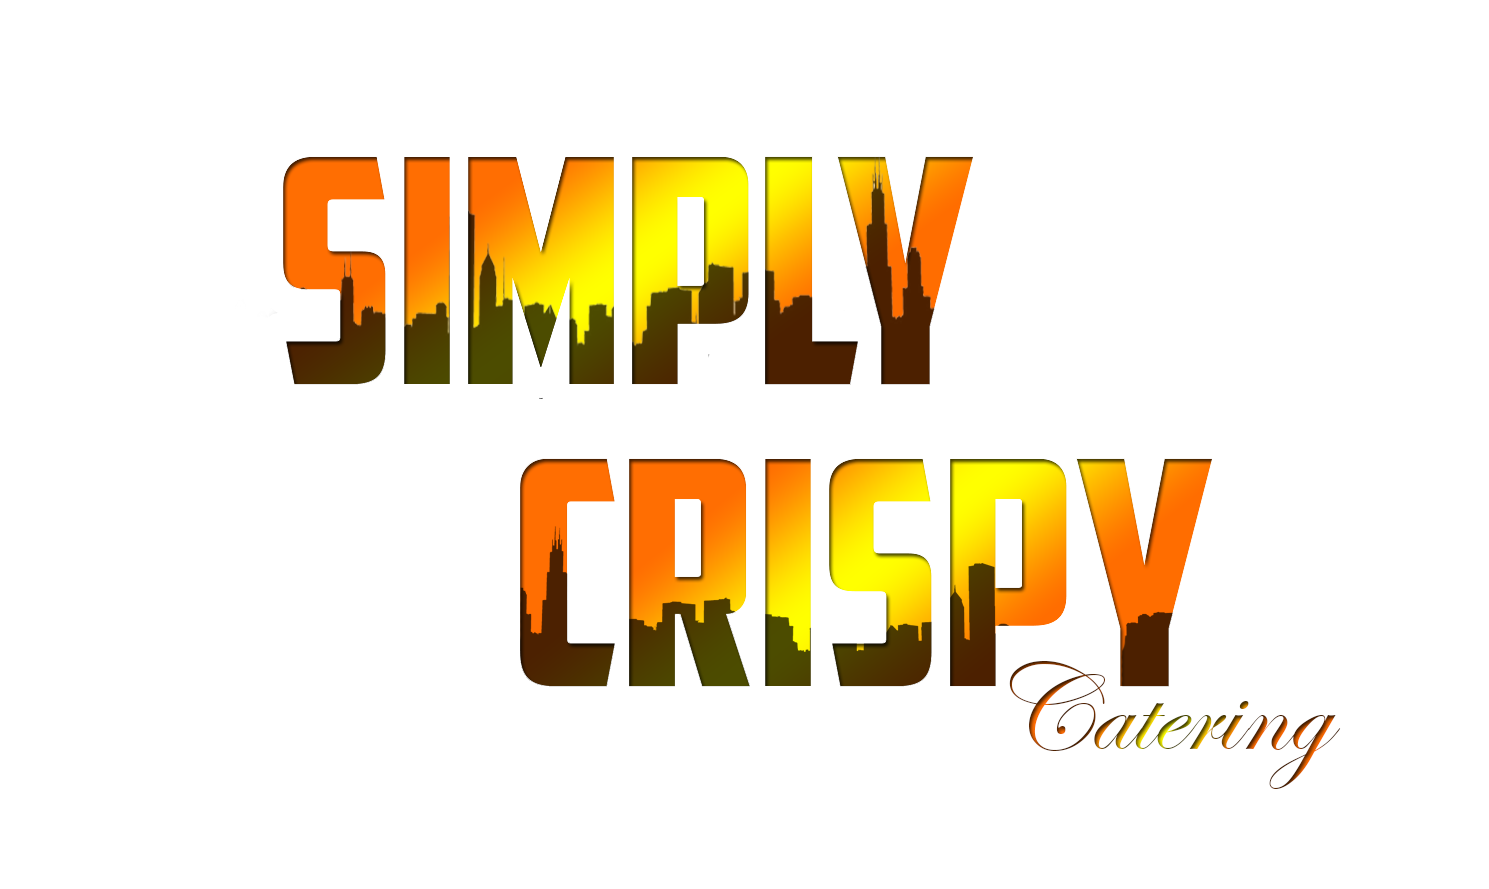 Simply Crispy